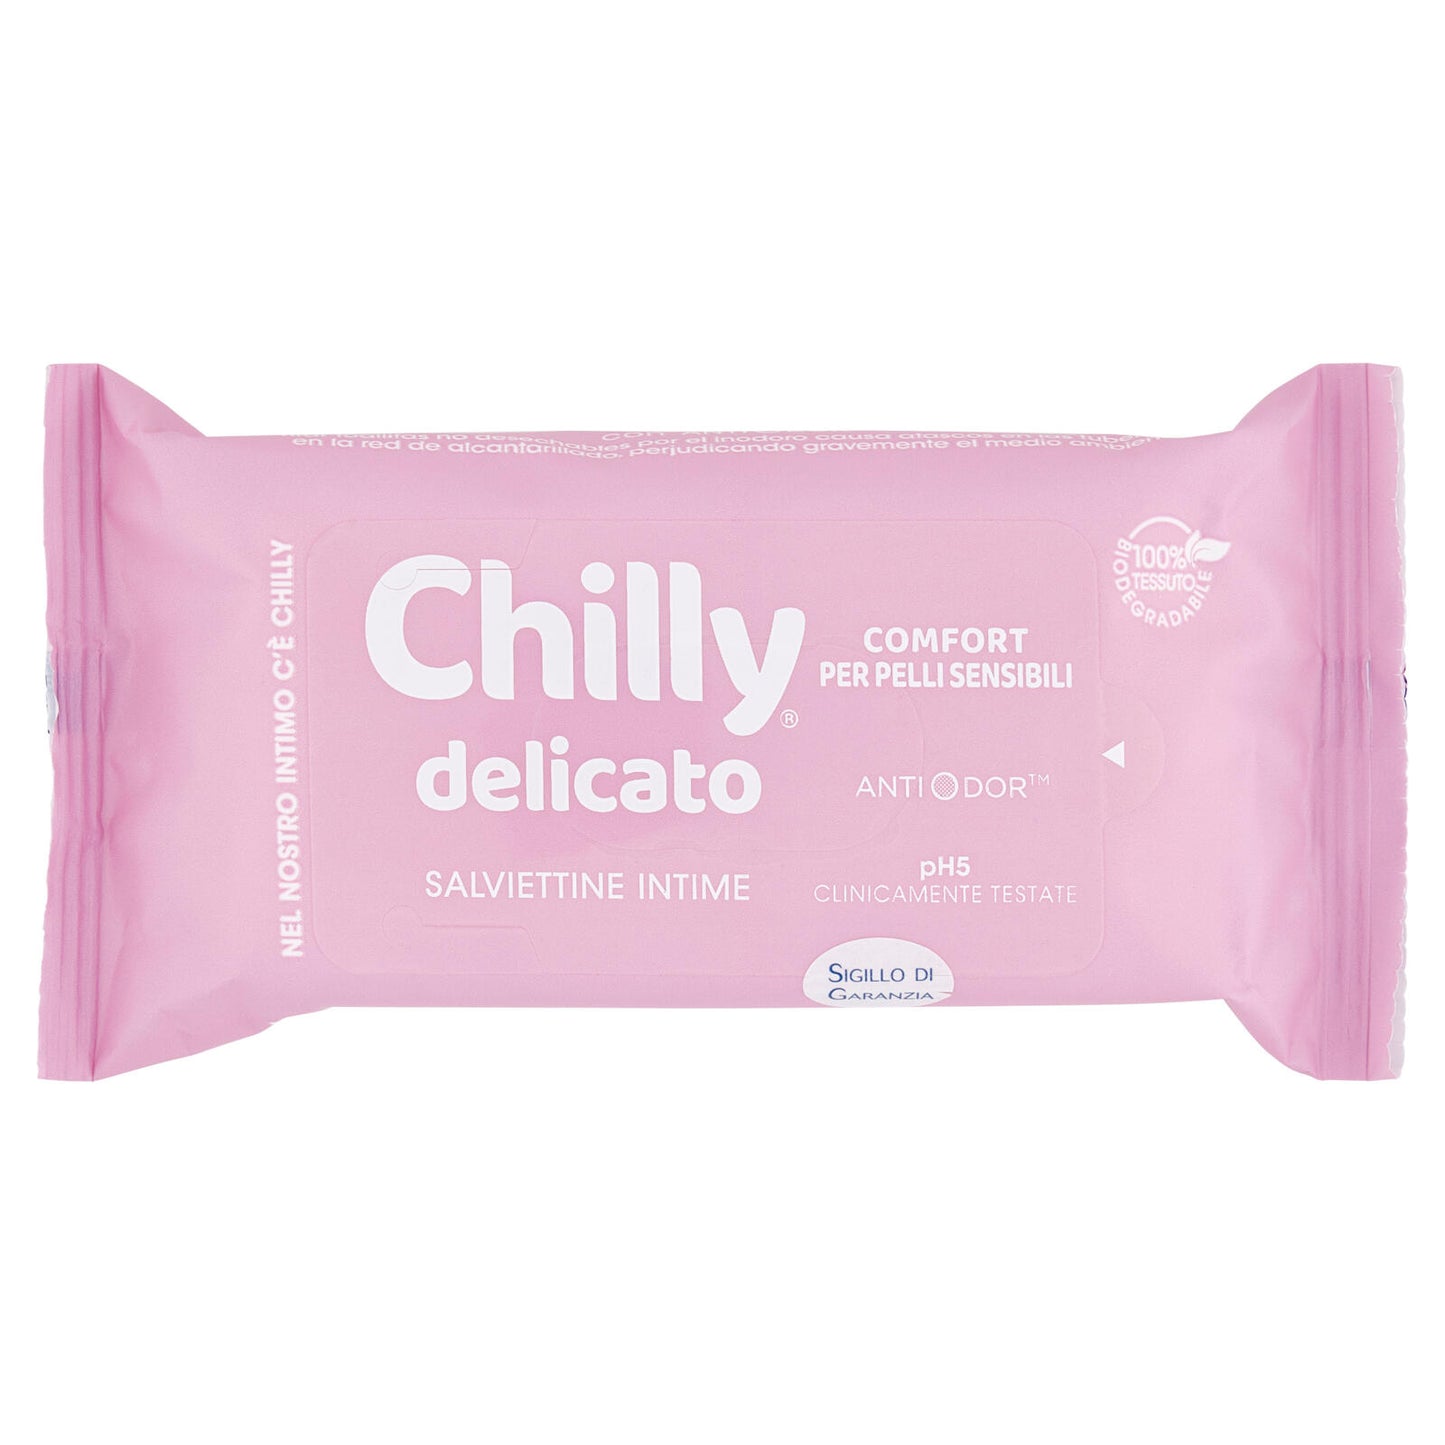 Chilly delicato Salviettine Intime 12 pz